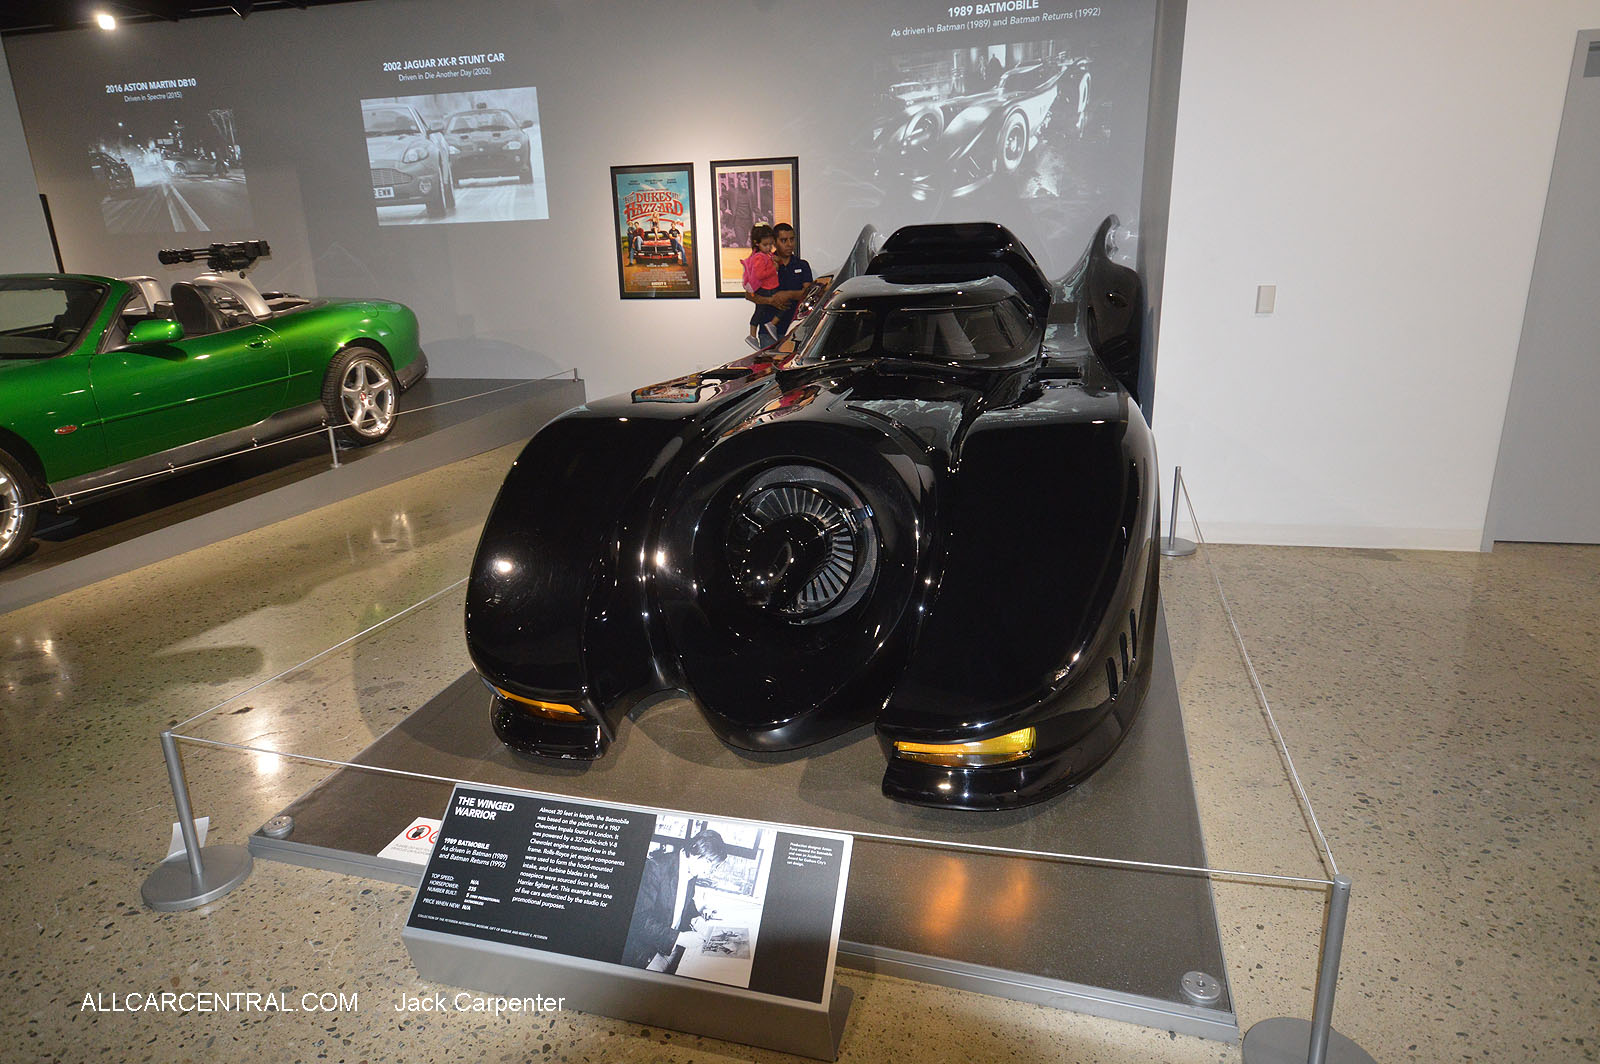   Batmobile 
1989  Petersen Automotive Museum 2016